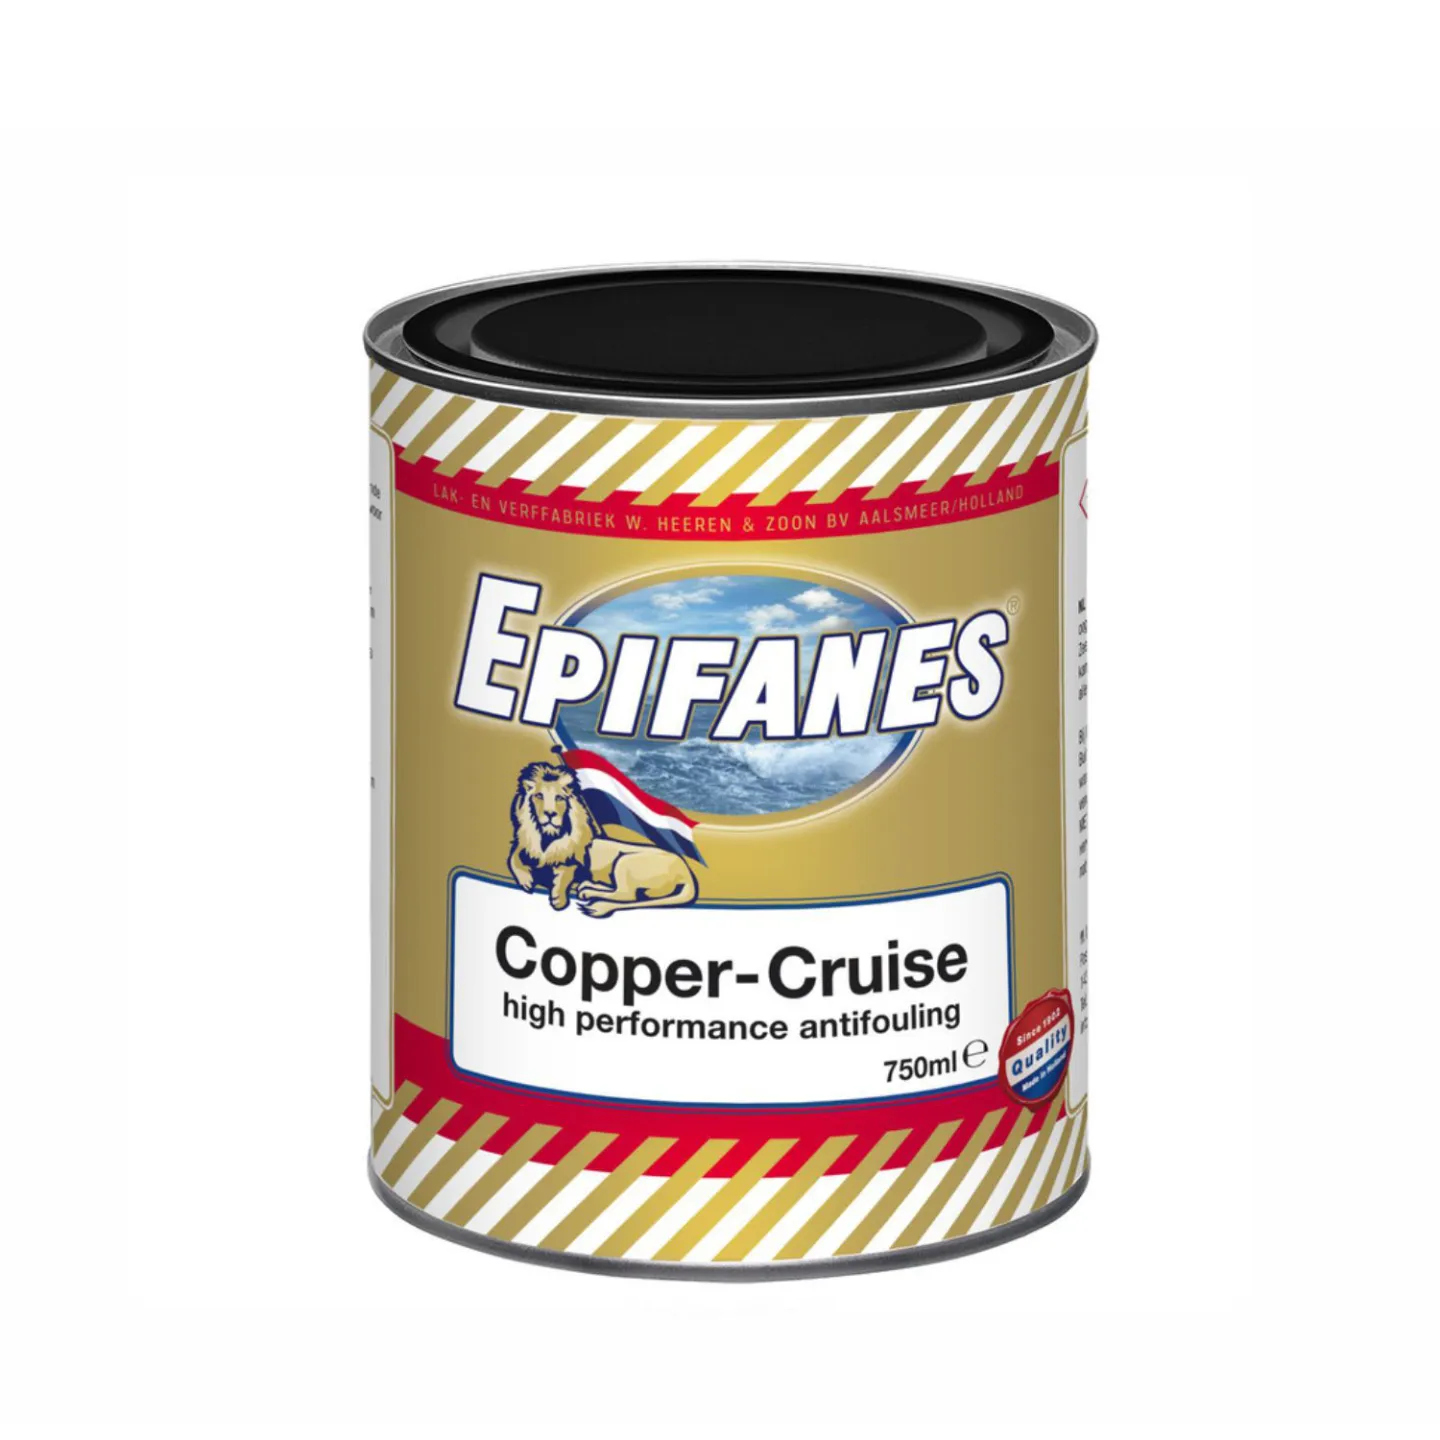 Epifanes antifouling copper cruise.